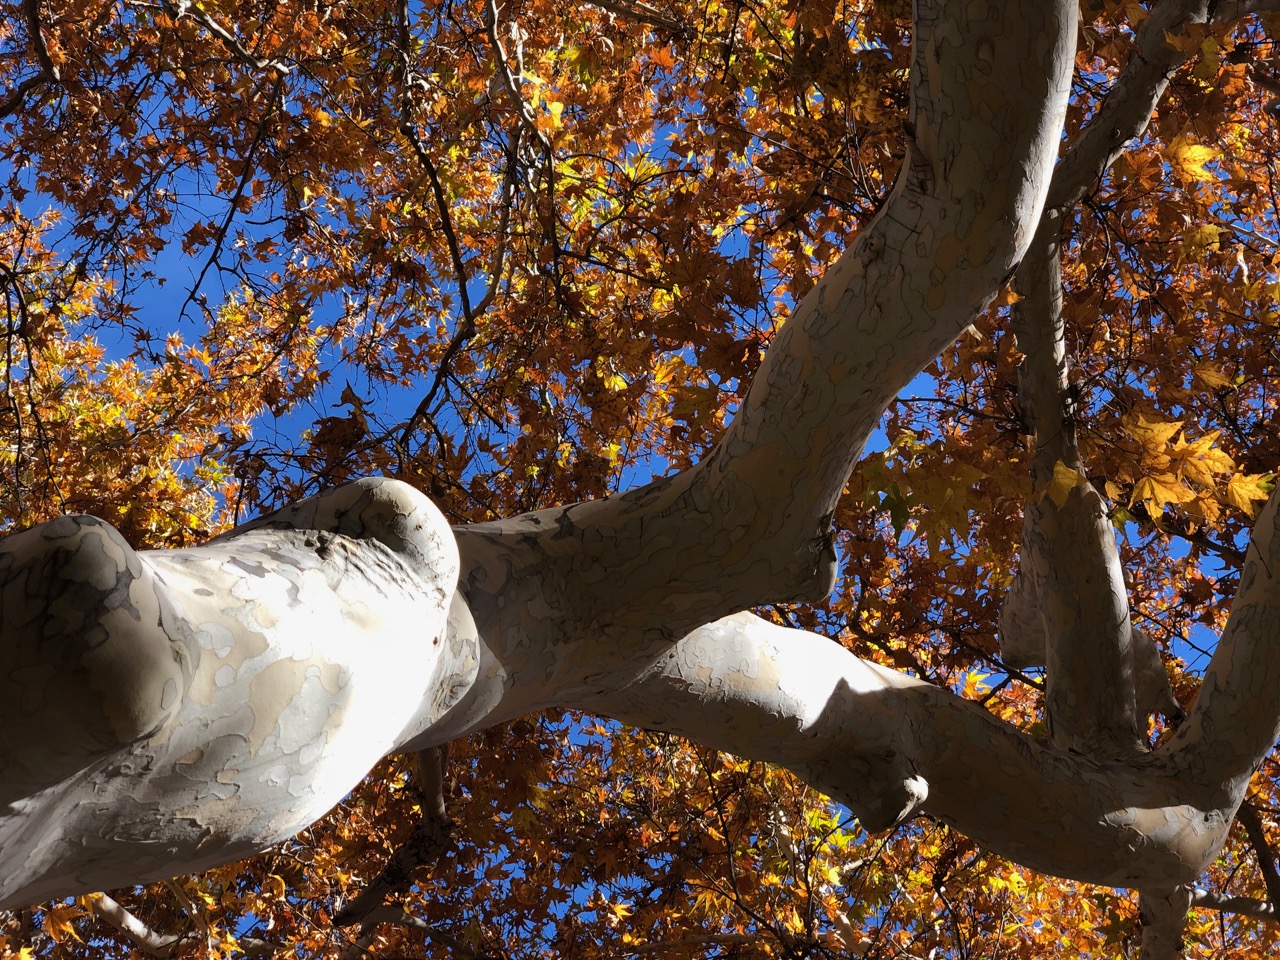 Fall leaves on an Arizona Sycamore tree near Oak Creek